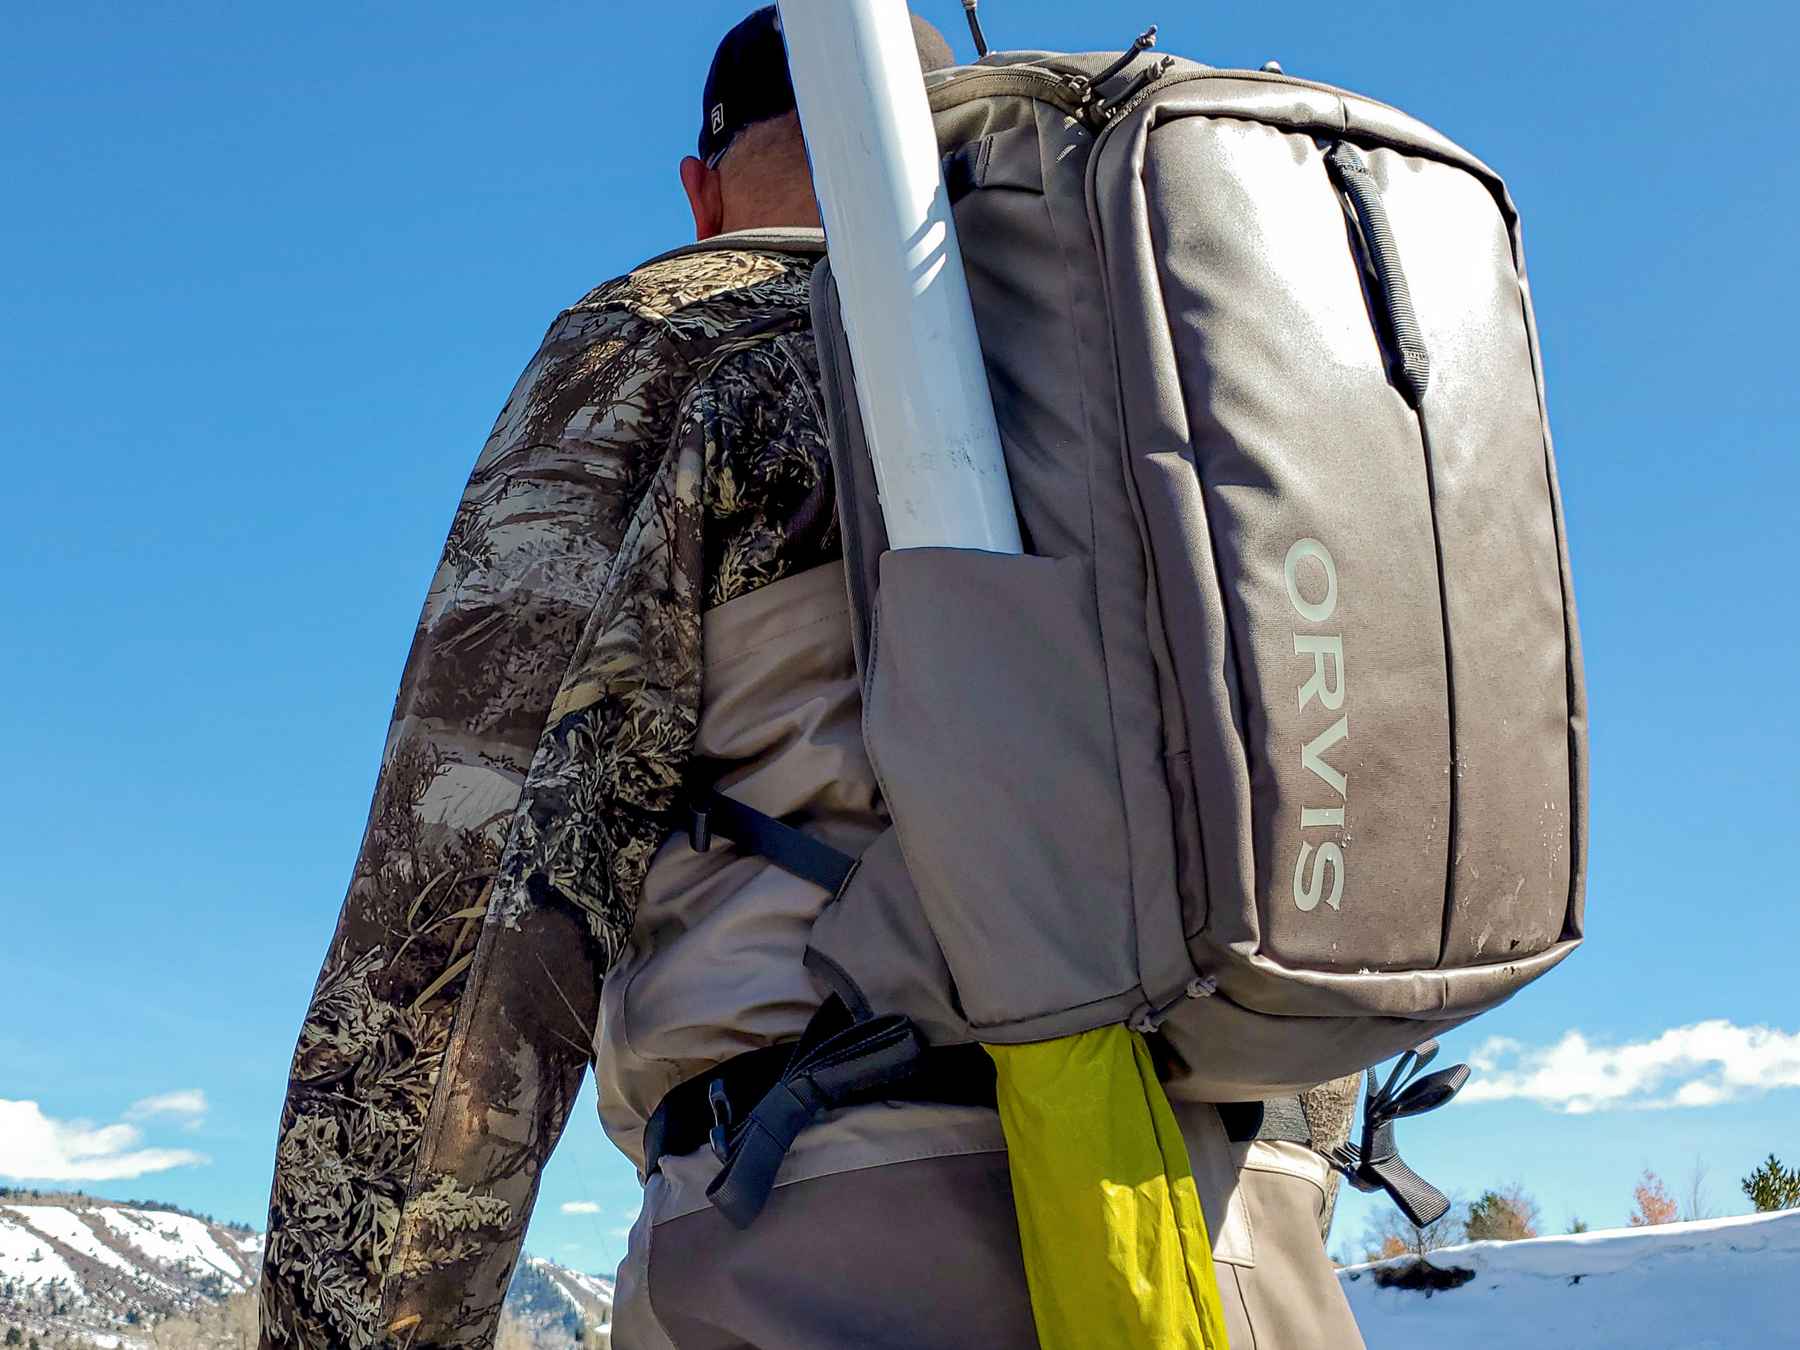 Choosing the perfect Fly Fishing Travel Bag